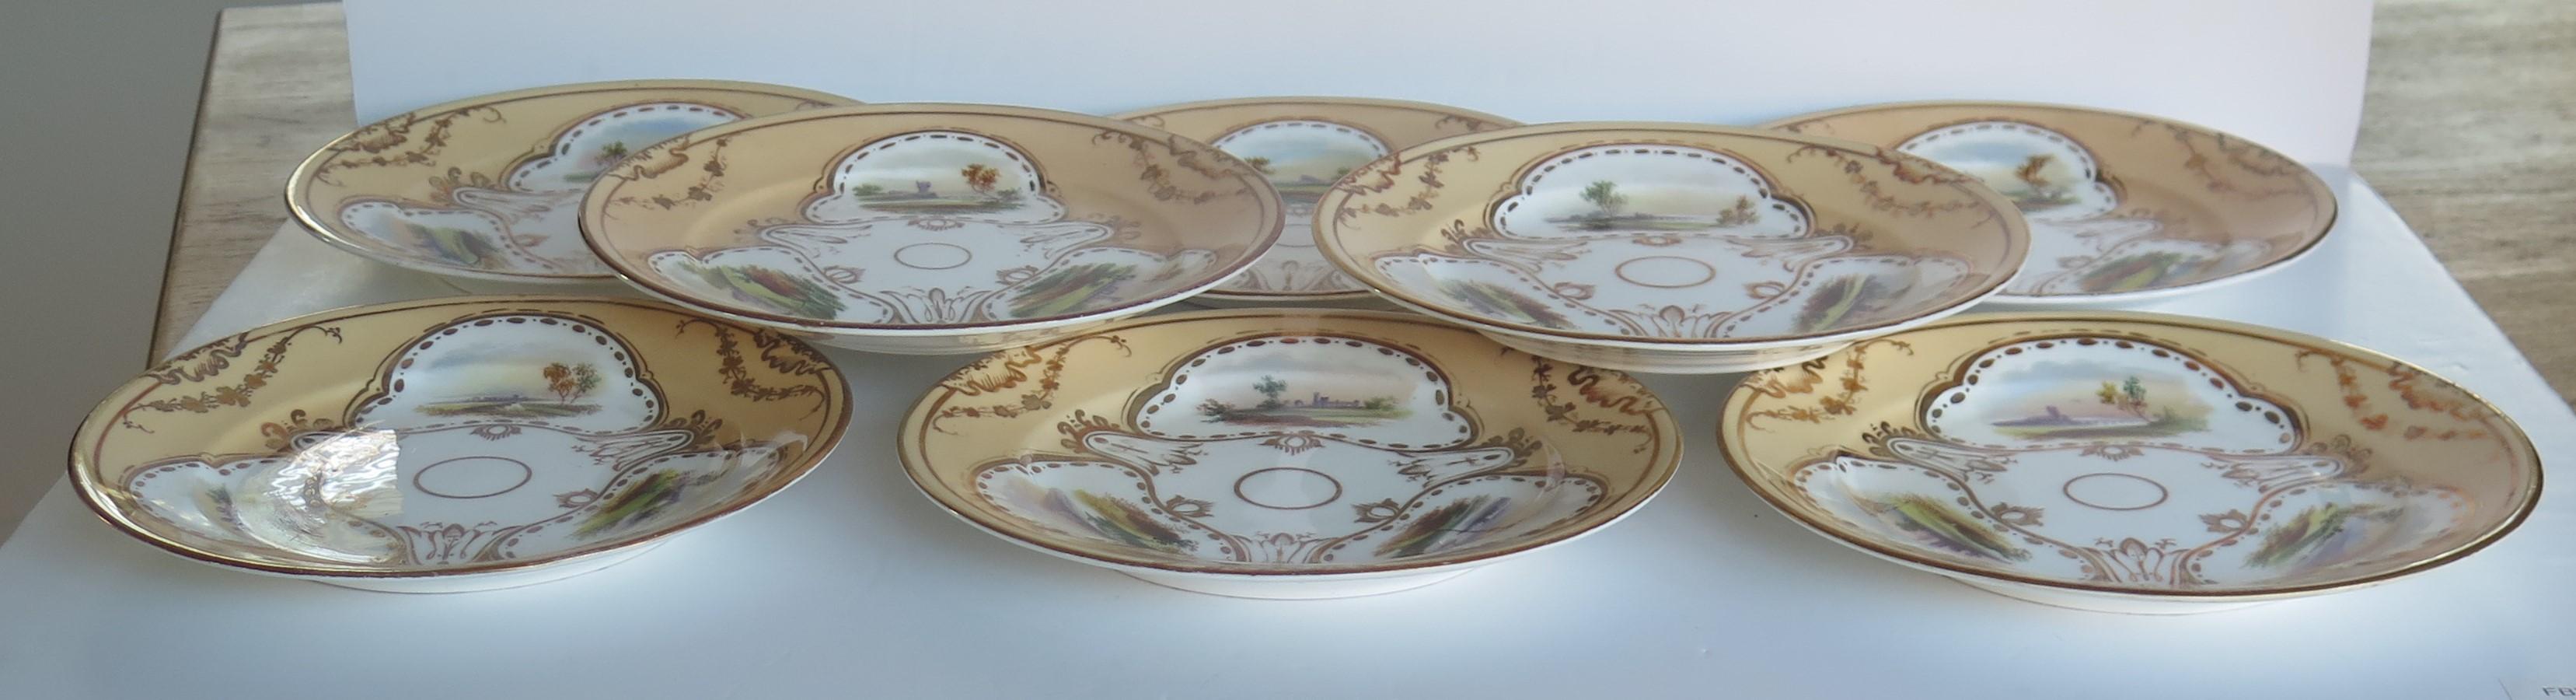 Porcelain Set of Ten Desert Plates by Rockingham porcelain Hand Painted Scenes, Circa 1825 For Sale